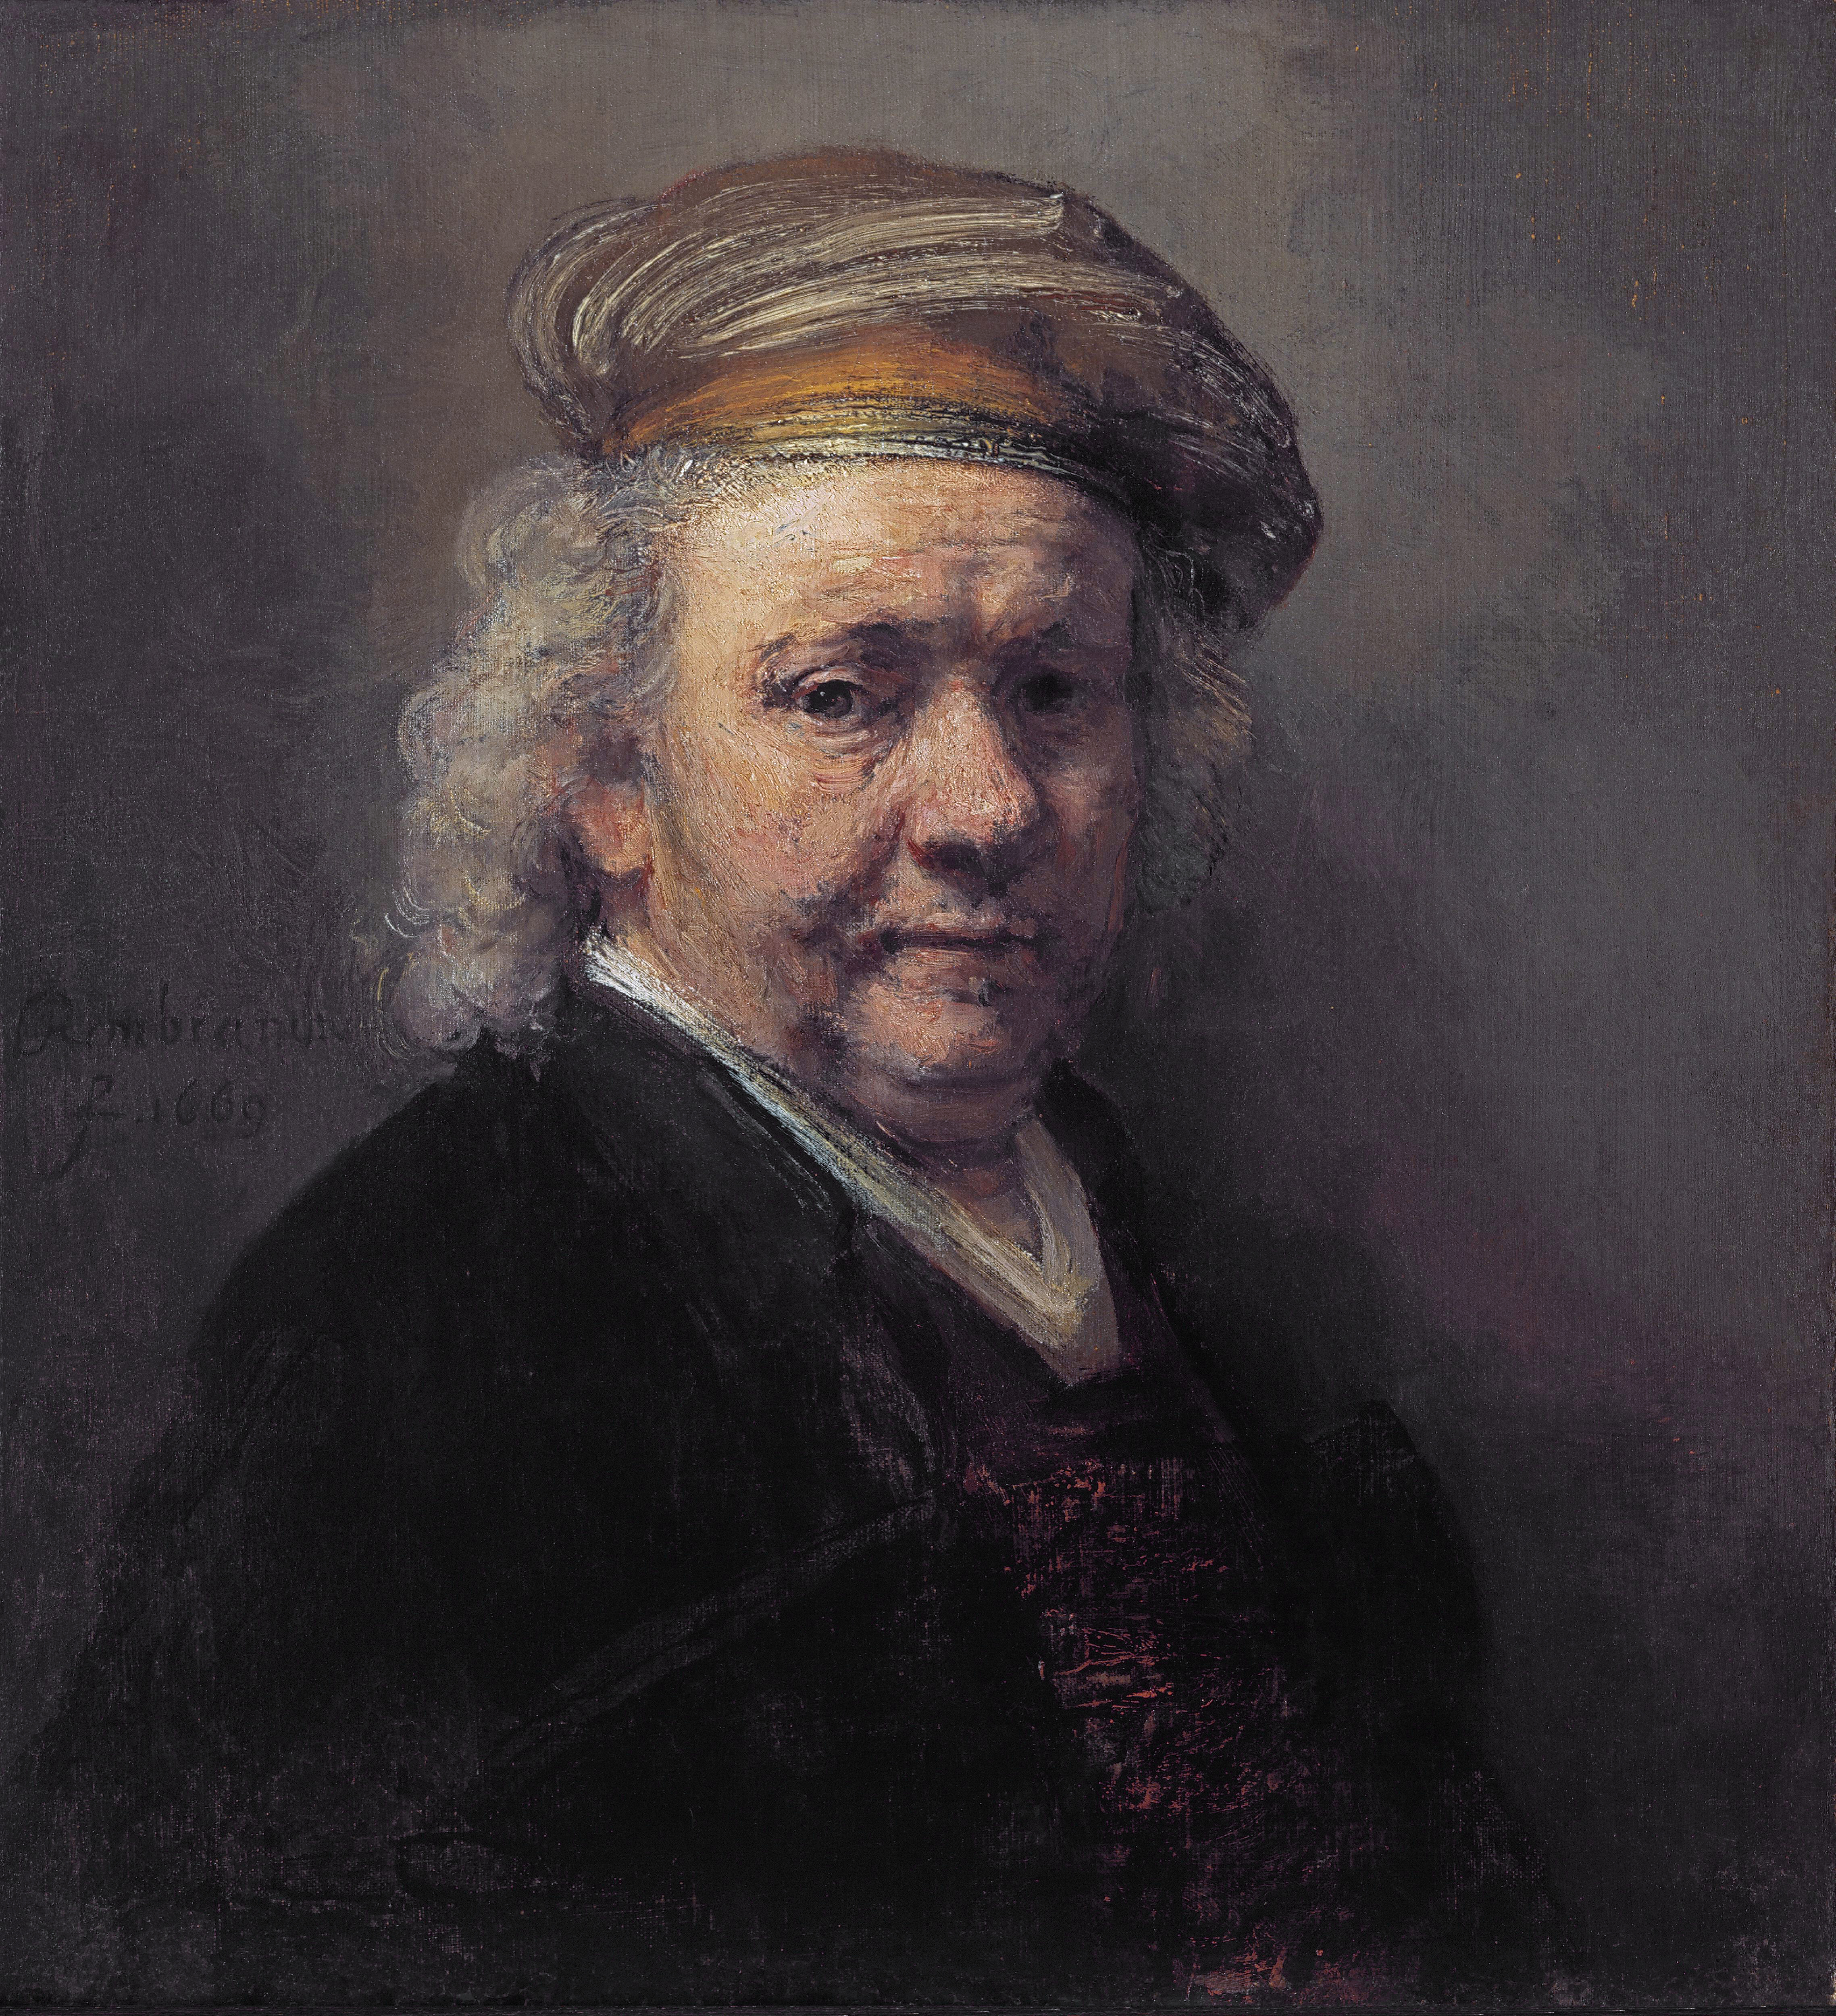 Self portrait, by Rembrandt